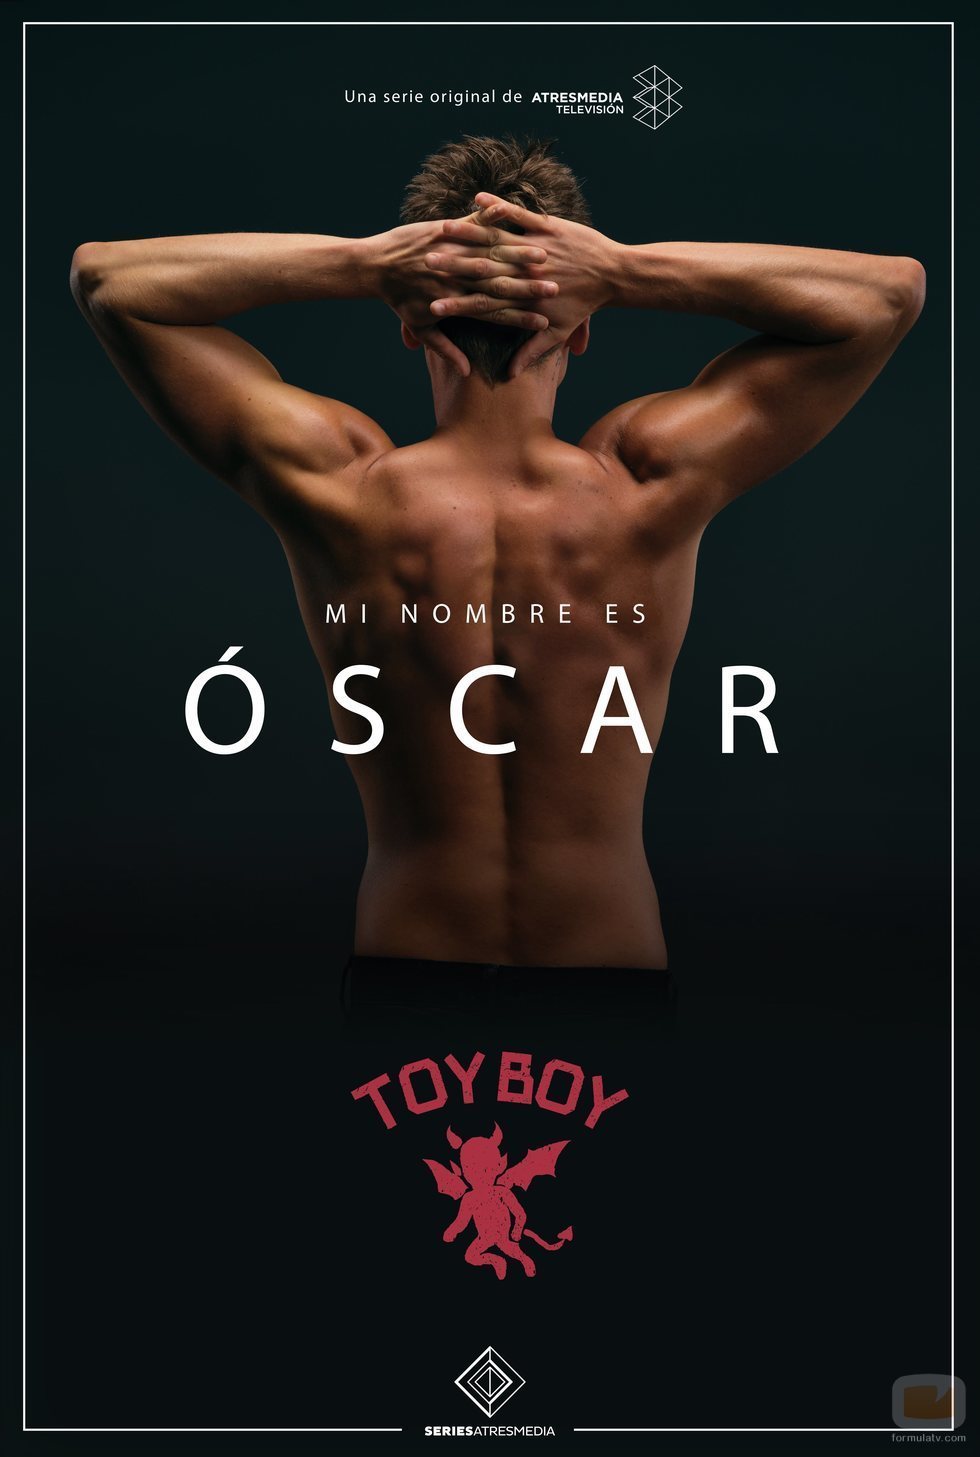 Óscar, en un póster promocional de 'Toy Boy'